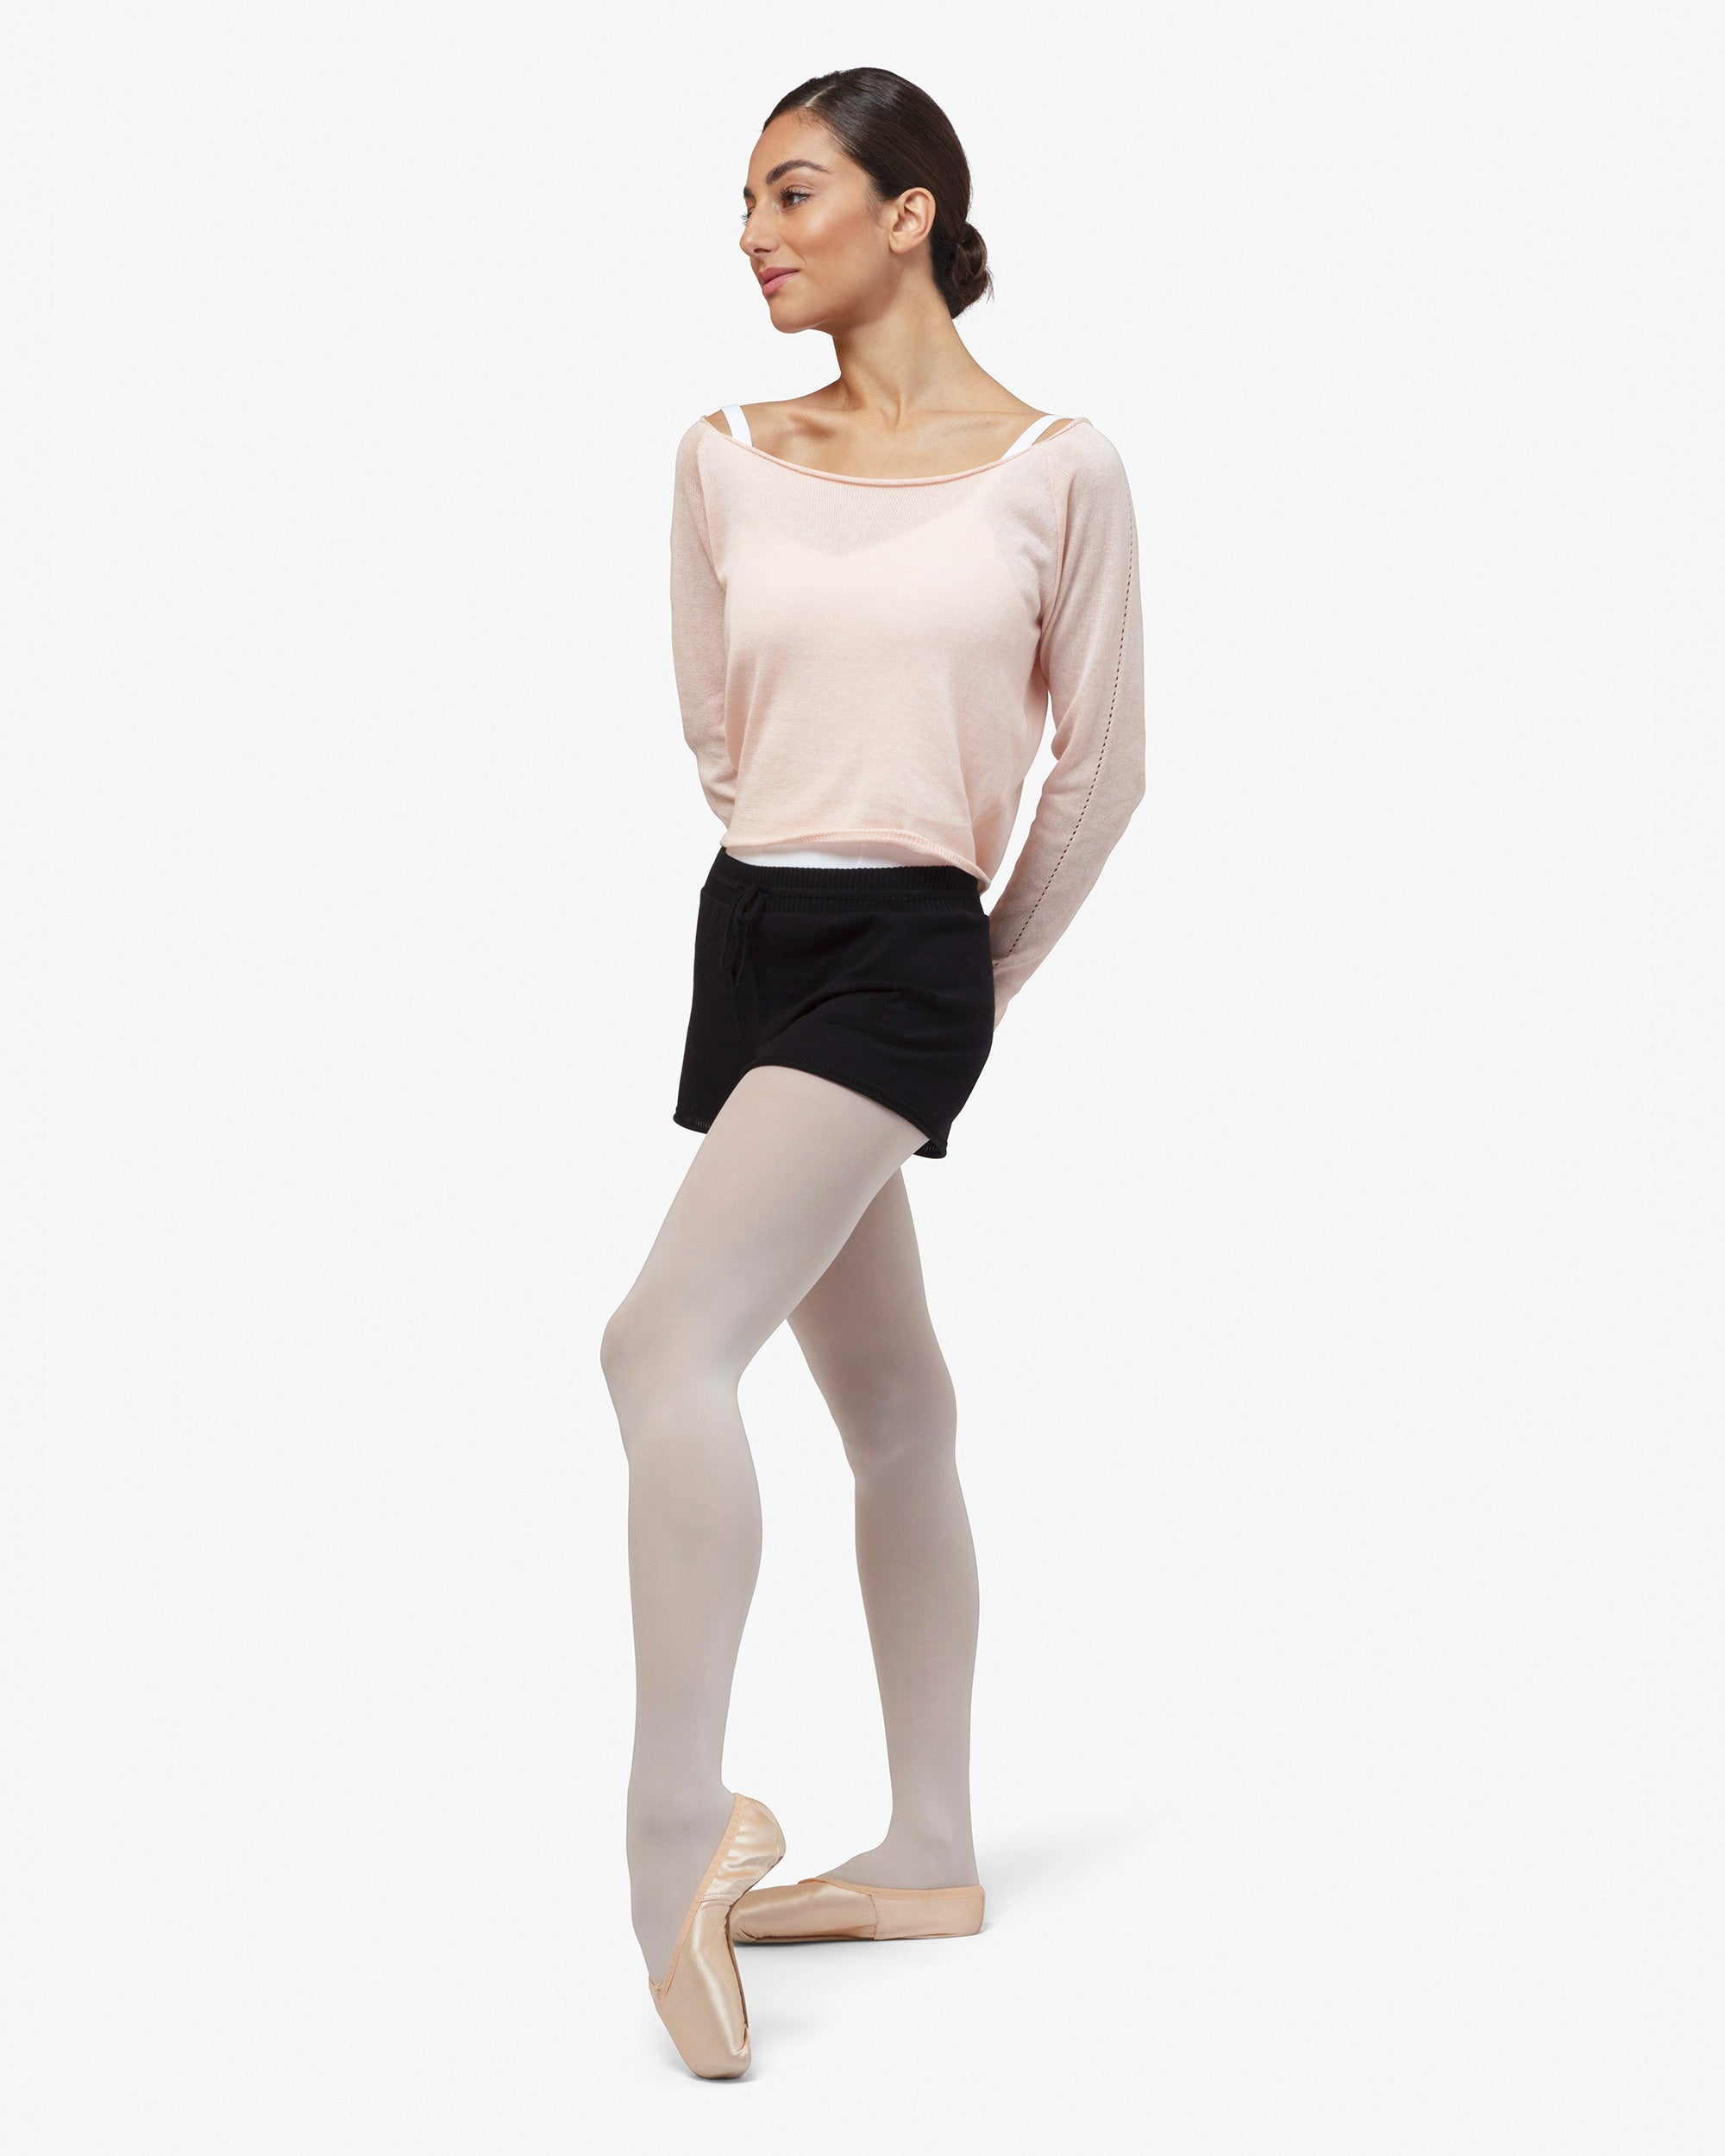 Balletwear Warm-Up Pants, Tops, Shorts, Sweater Tights